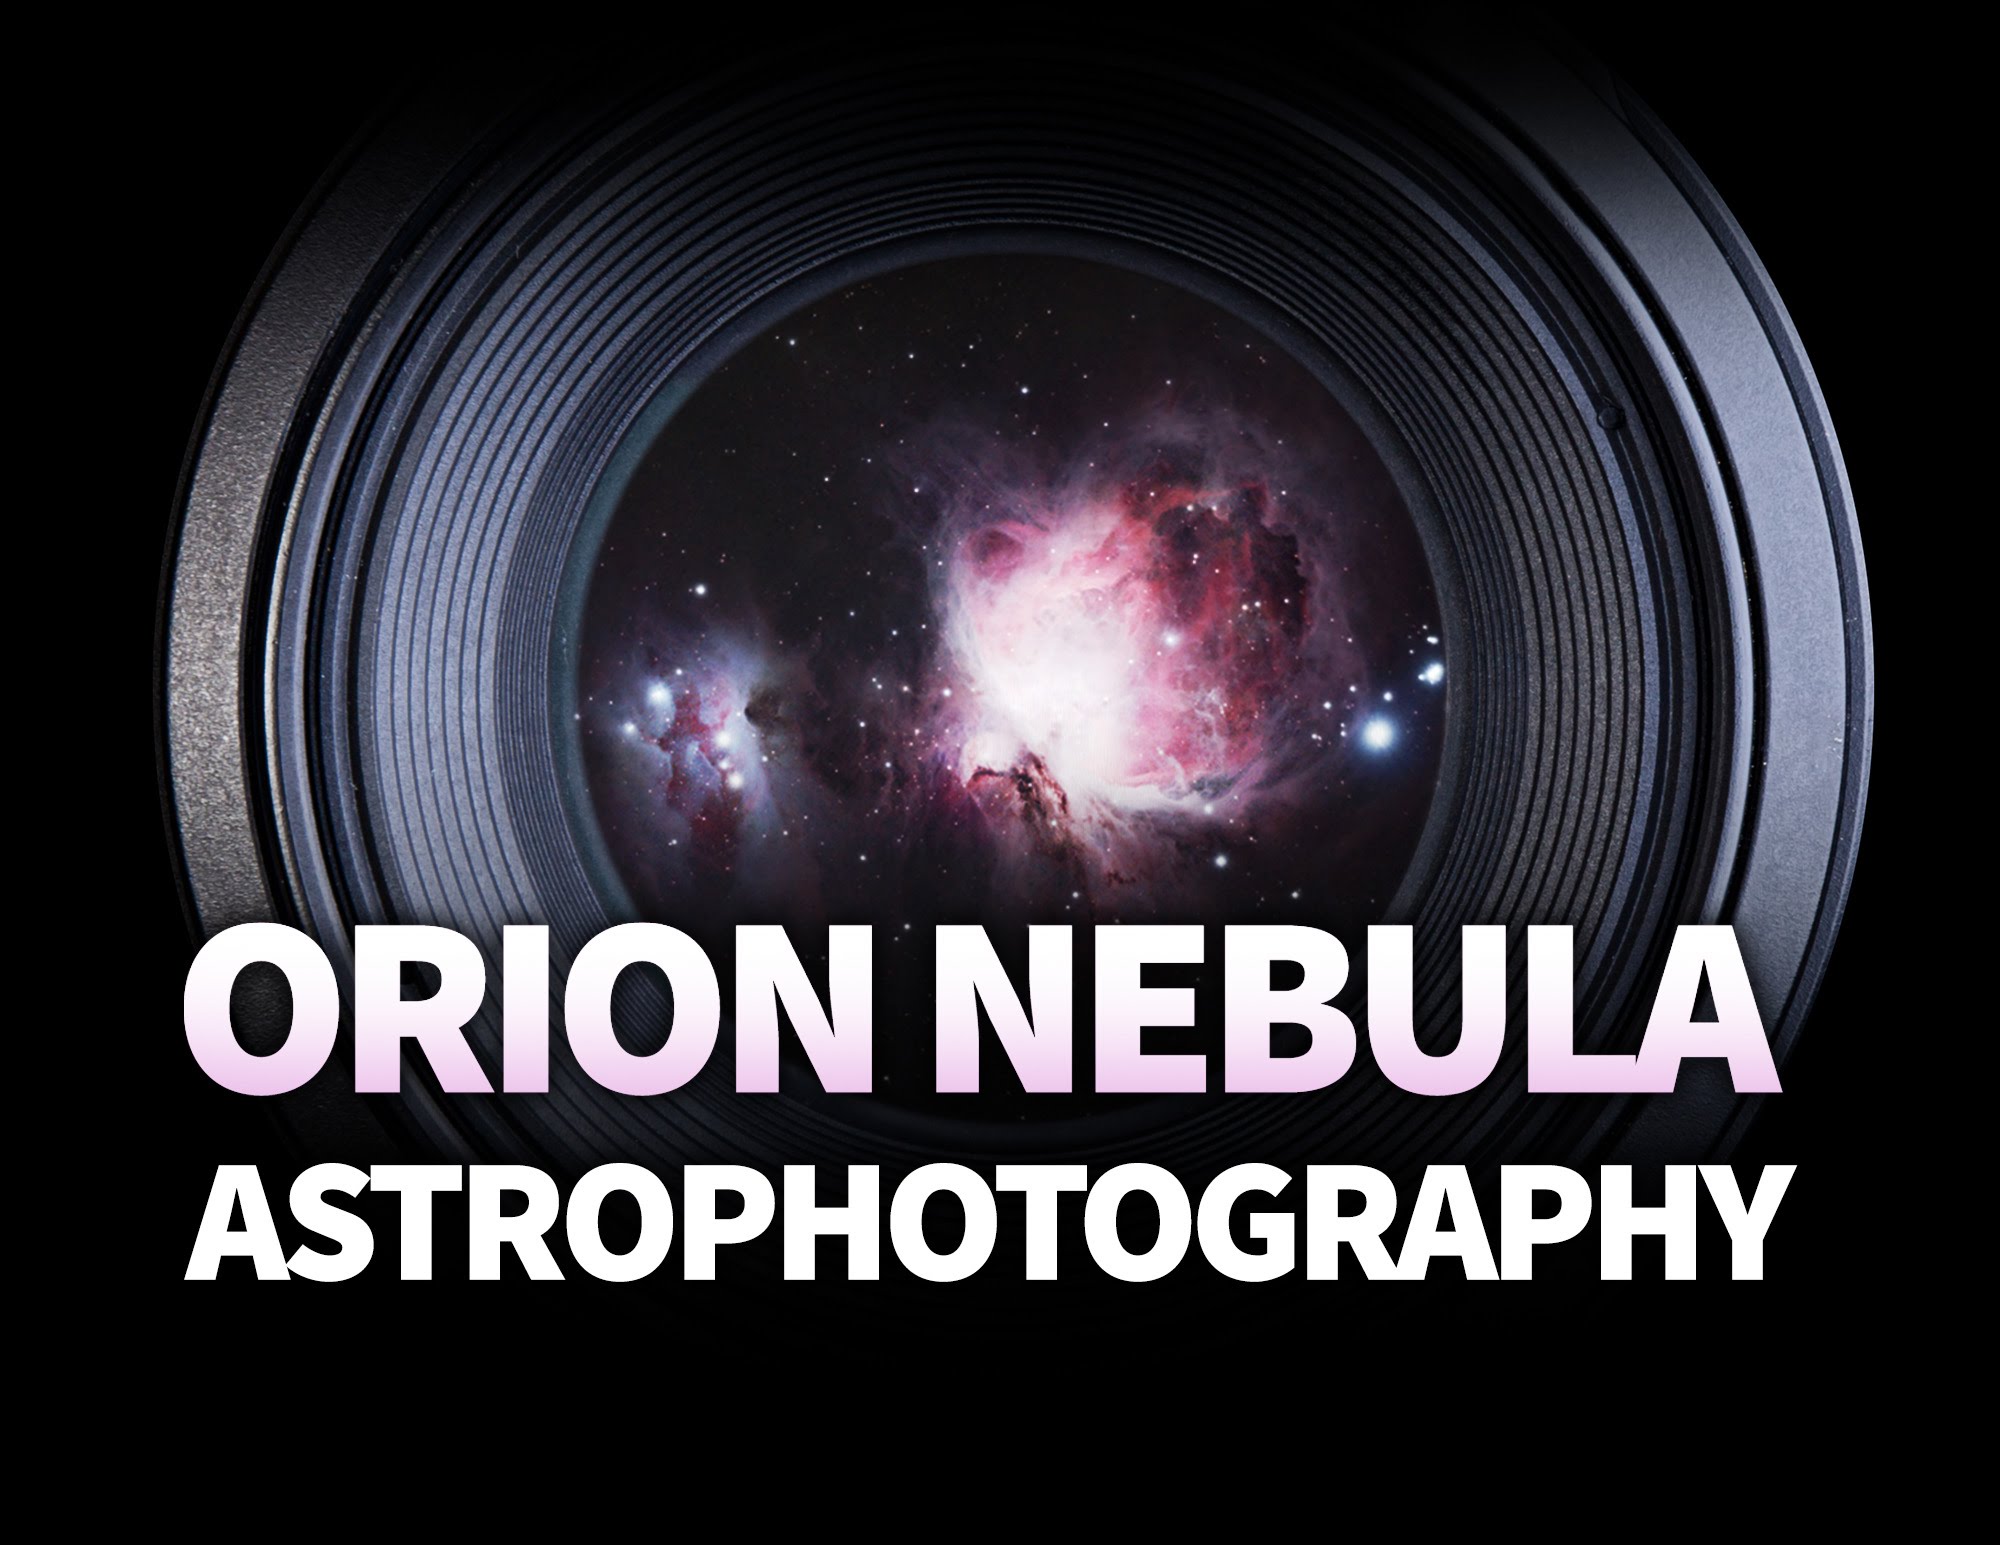 M42 – Orion Nebula – Astrophotography Image using DSLR Camera in Backyard